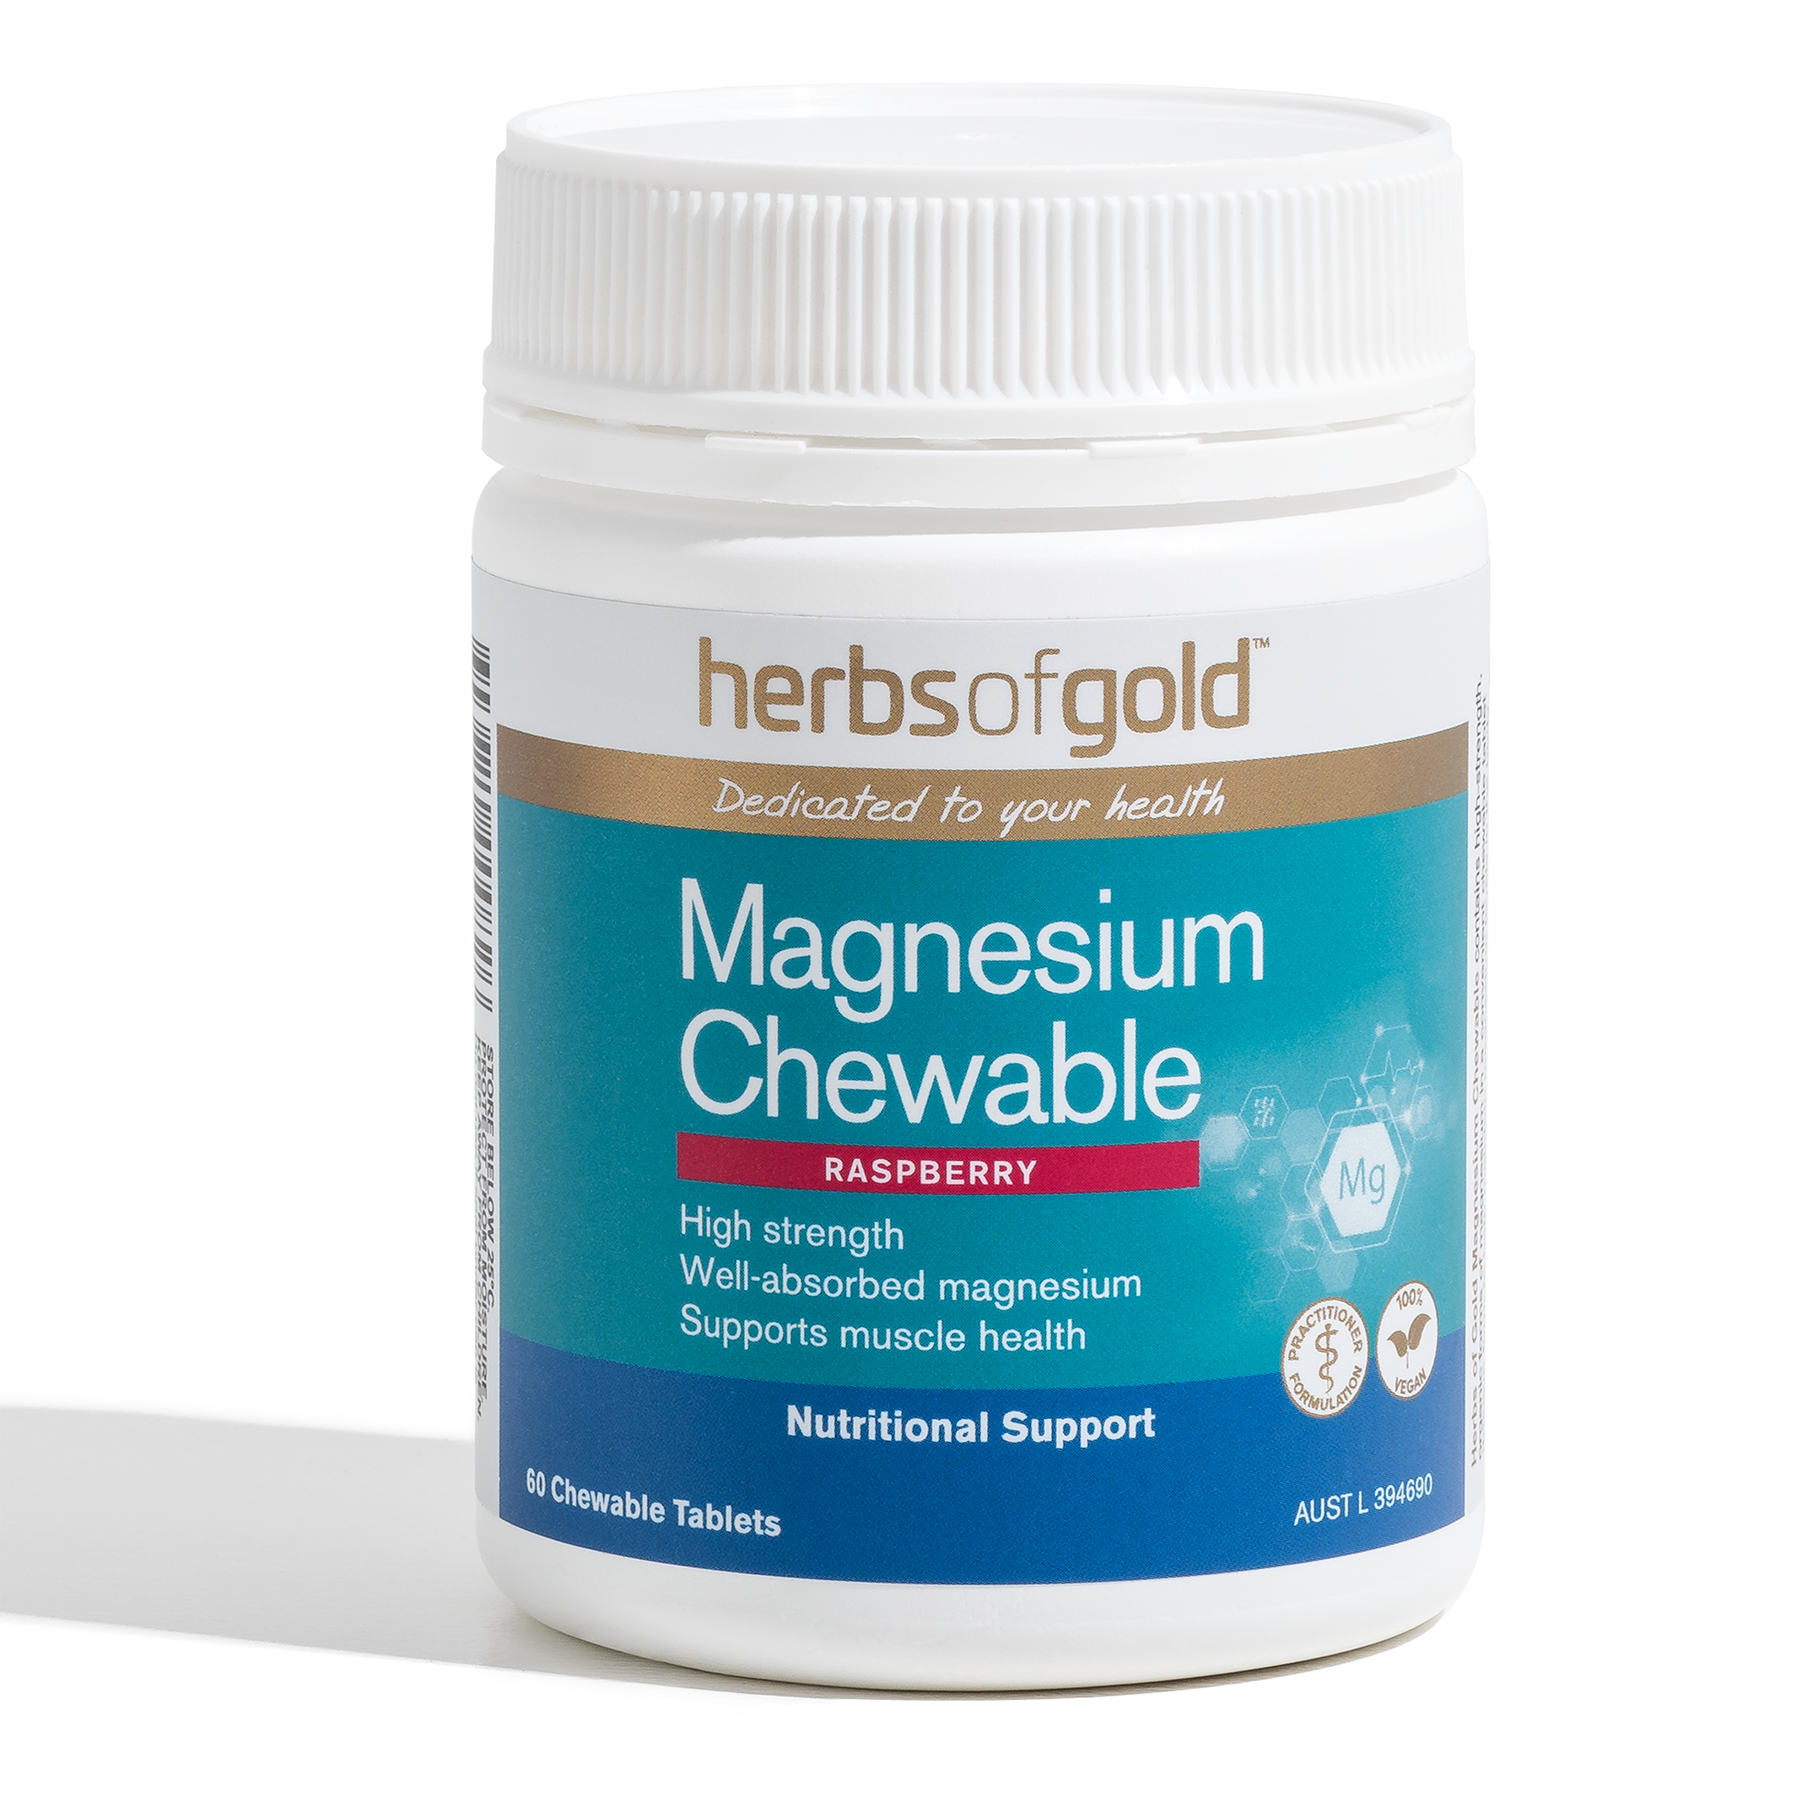 Magnesium Chewable